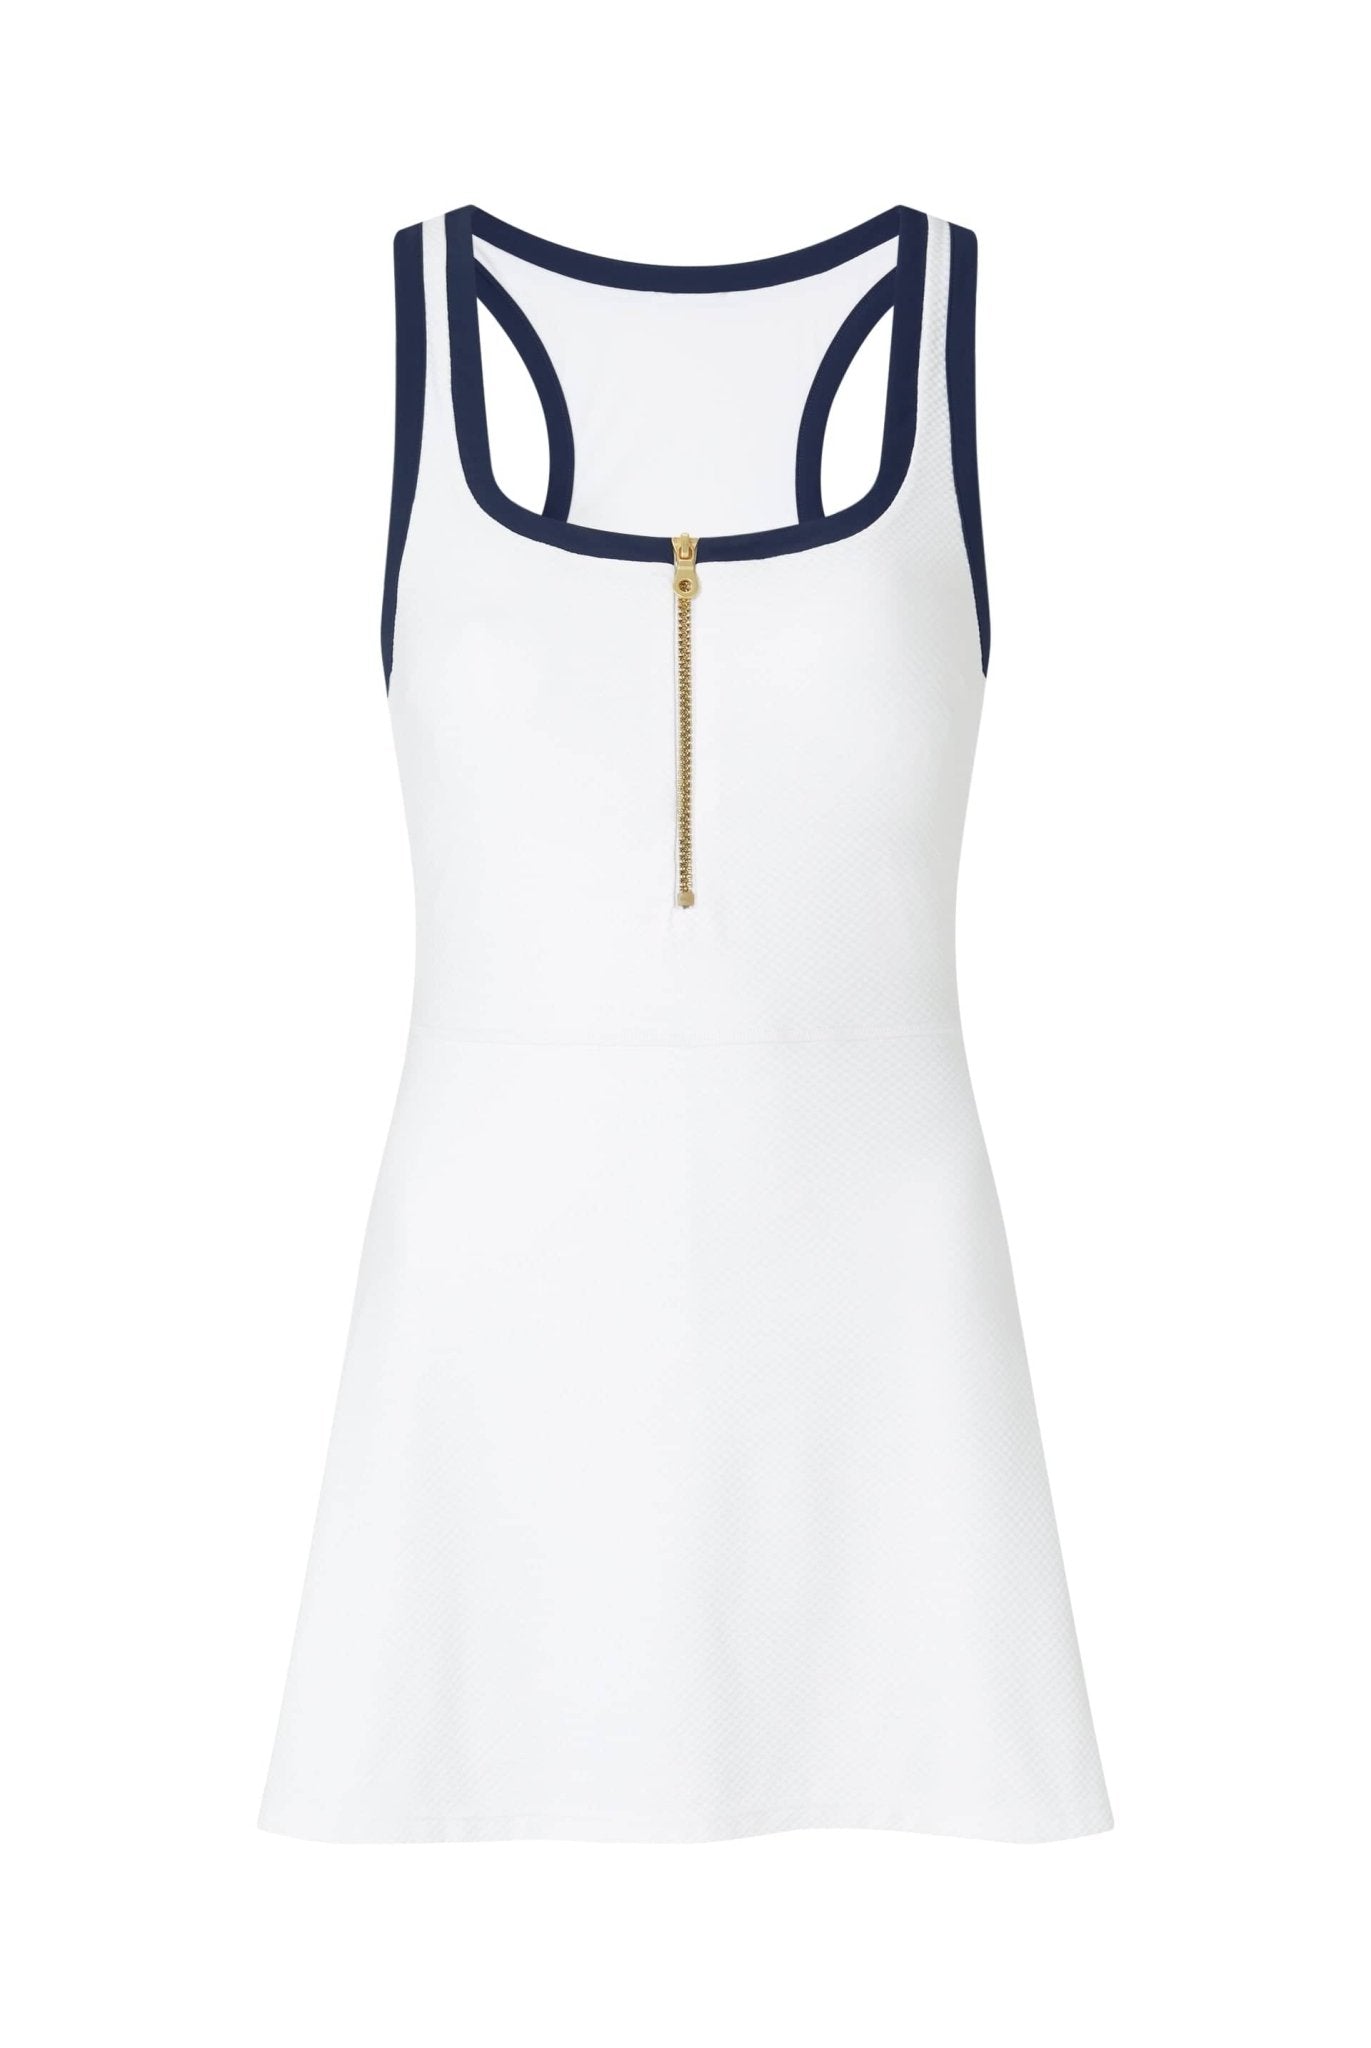 Montauk Tennis Dress - Heidi Klein - UK Store